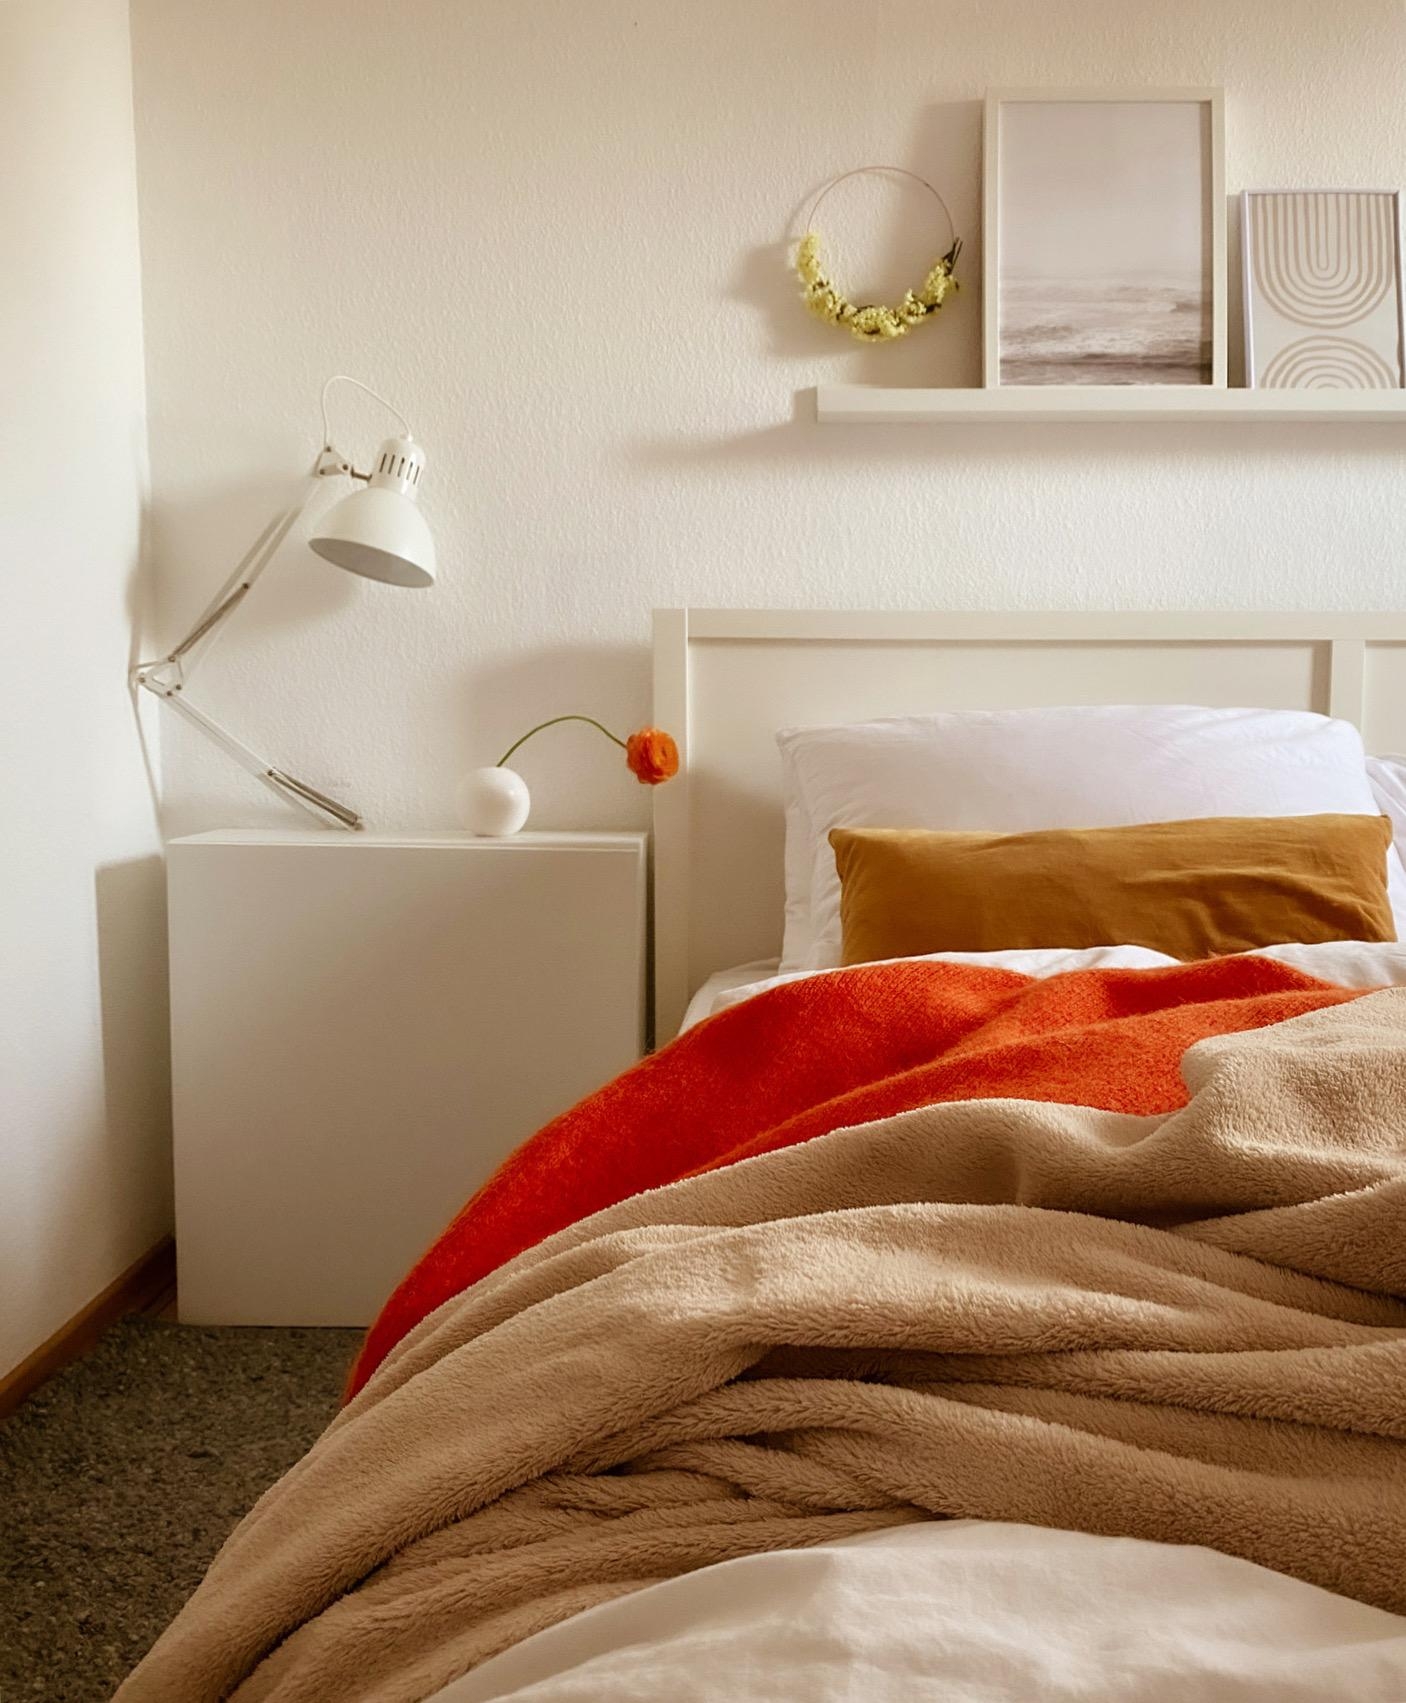 Ab ins Bett!!
#cozy#hyggehome#bedroom#bedroomdecor#colourfulhome#homestyle#sunlight#sleepingroom